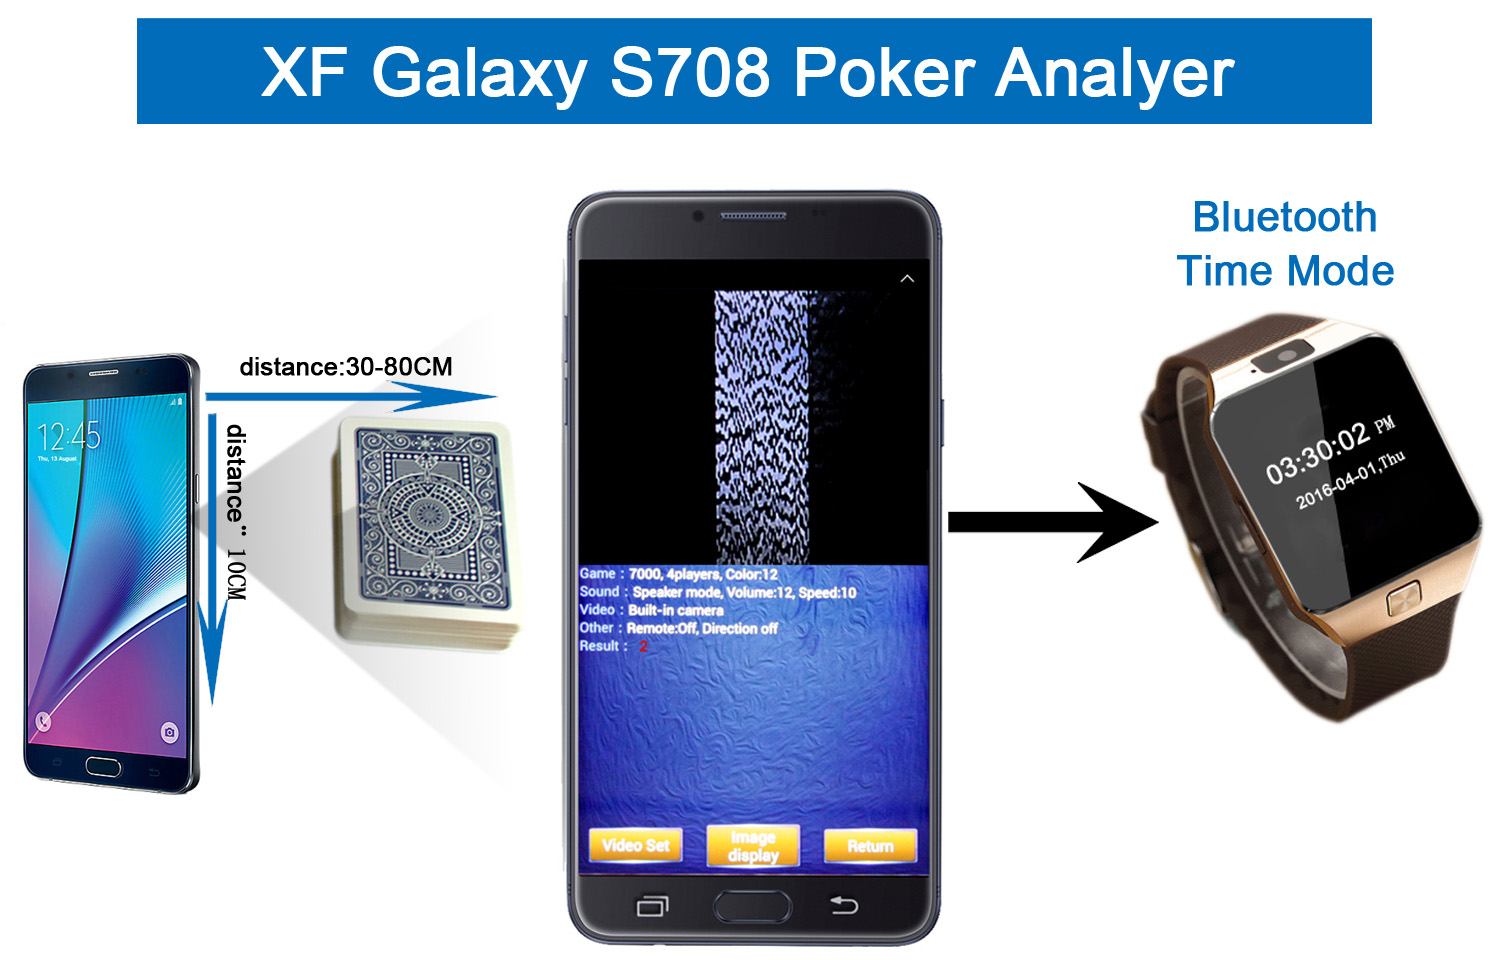 XF 2017 Galaxy Note7 PK King 708 Poker Analyzer with Newest Technology